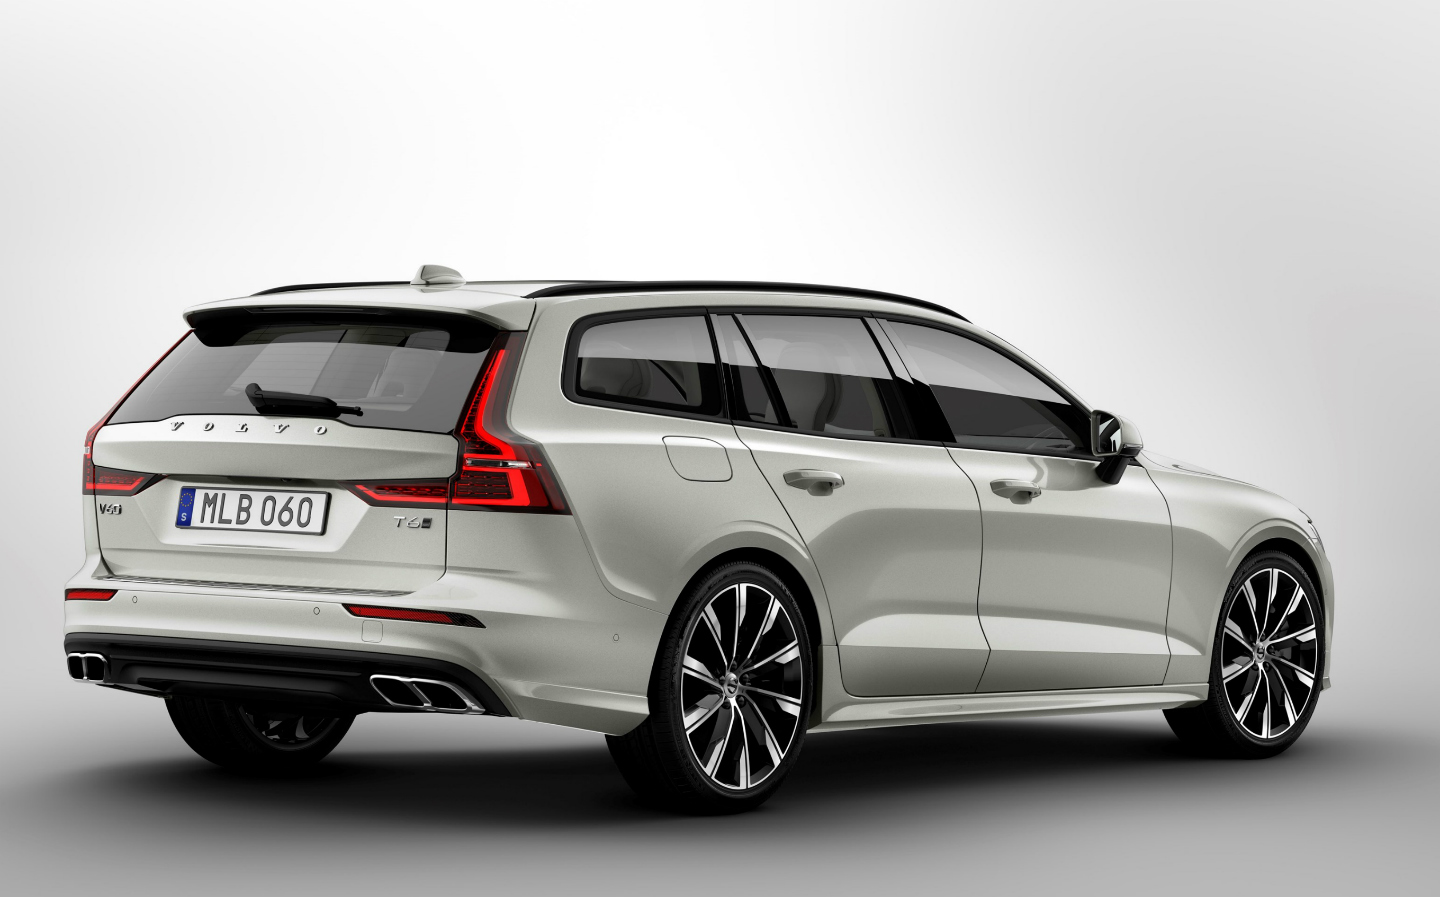 New 2018 Volvo V60 estate rear view